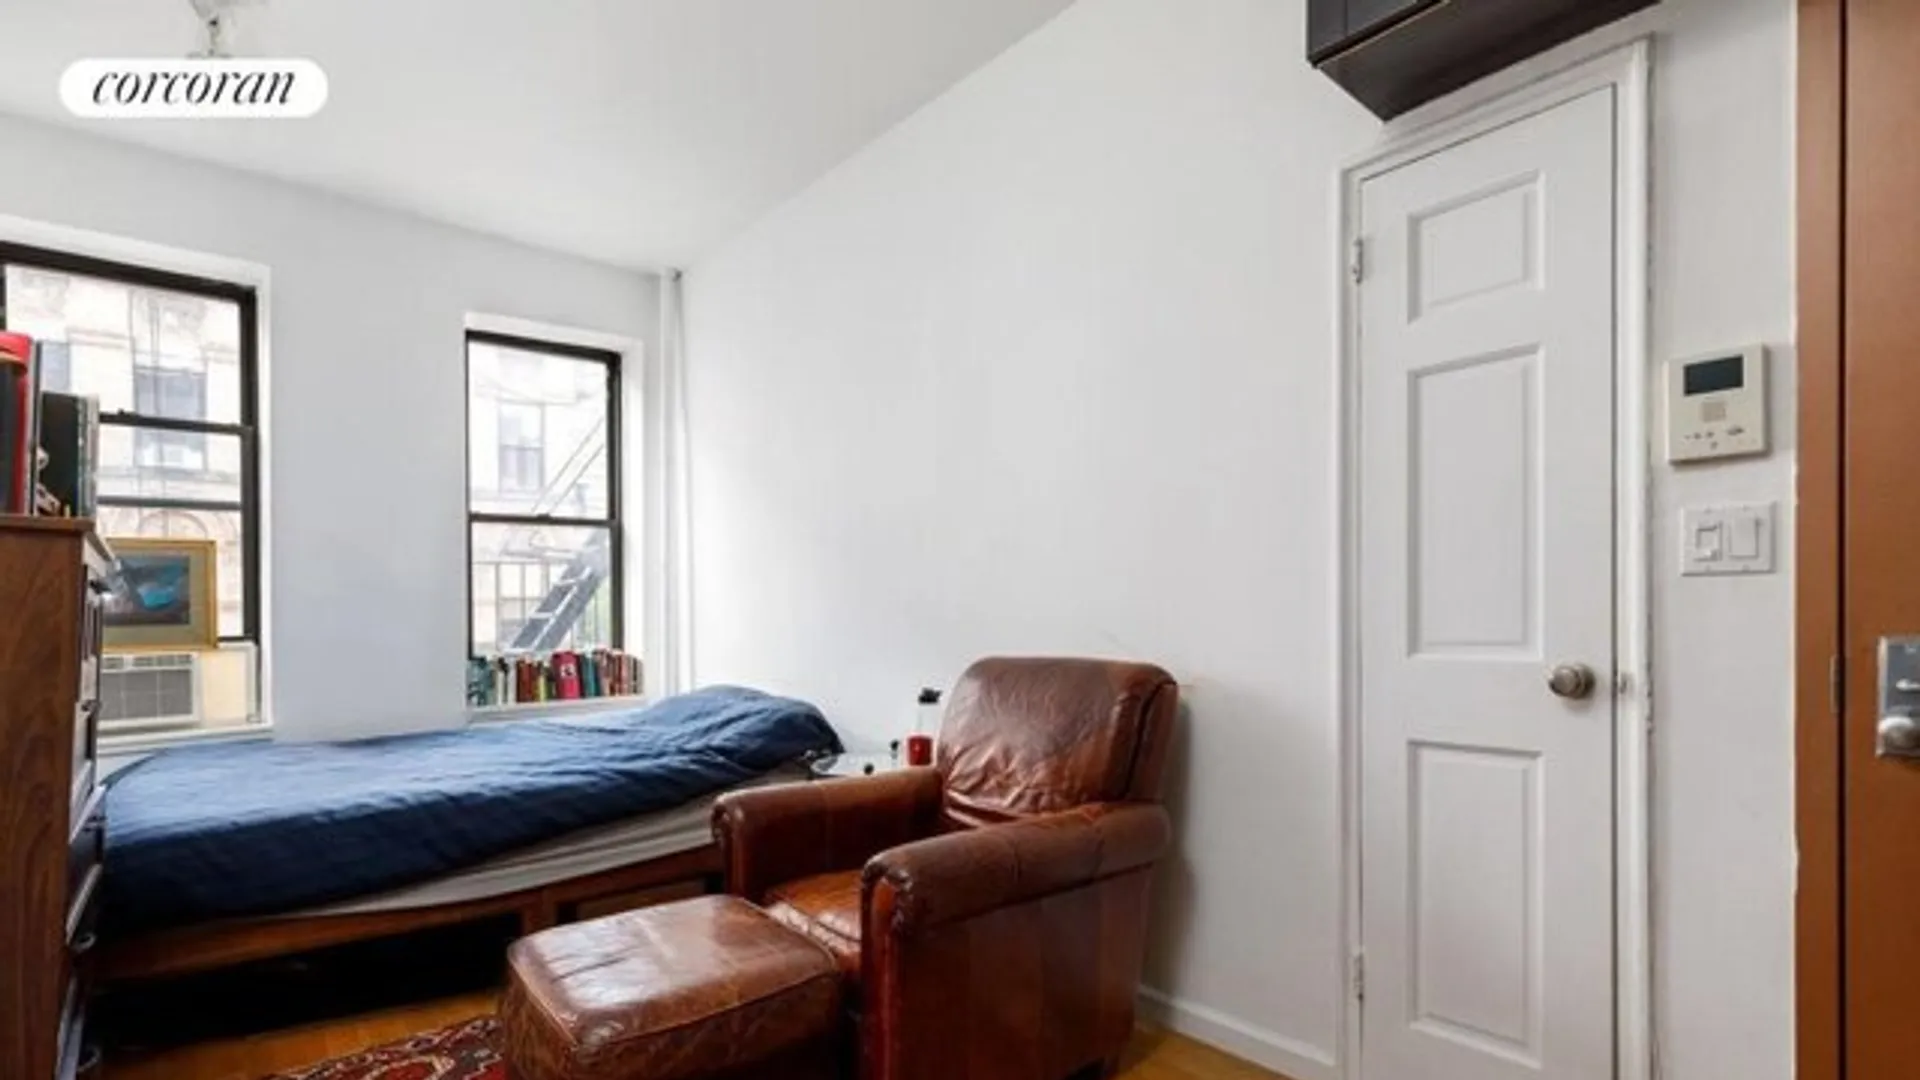 66 Hester Street, New York, NY 10002, USA | Studio apartment for rent